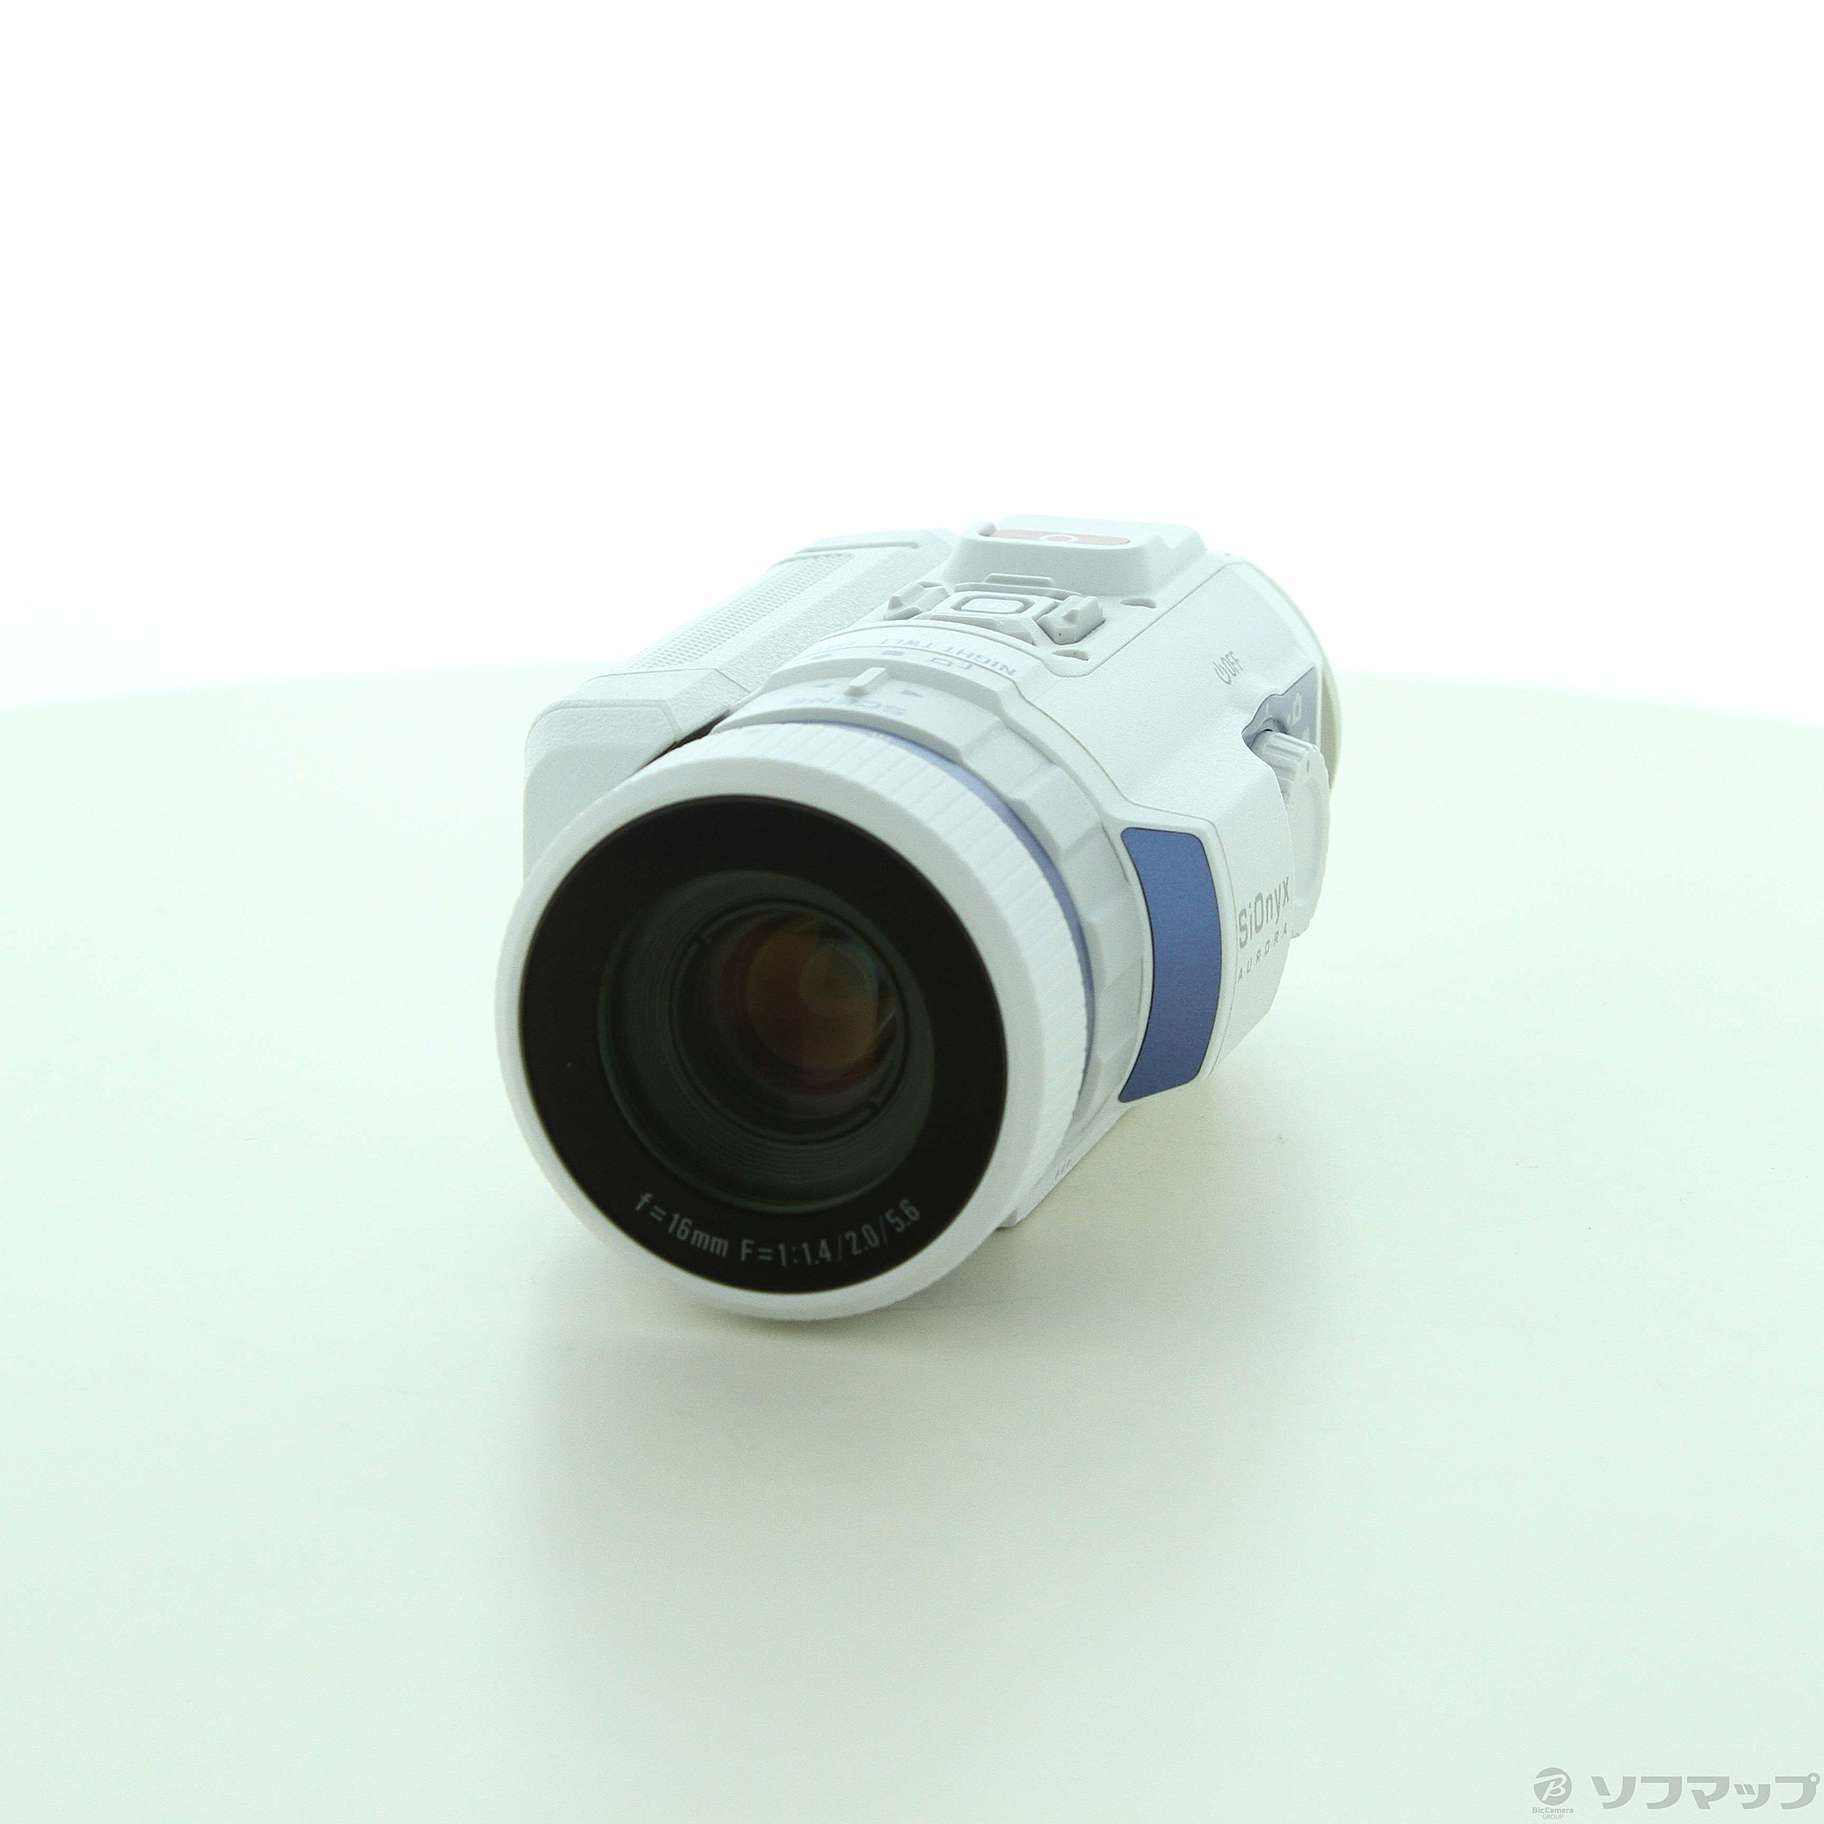 SIONYX CDV-200C オーロラスポーツ ビデオカメラ - カメラ